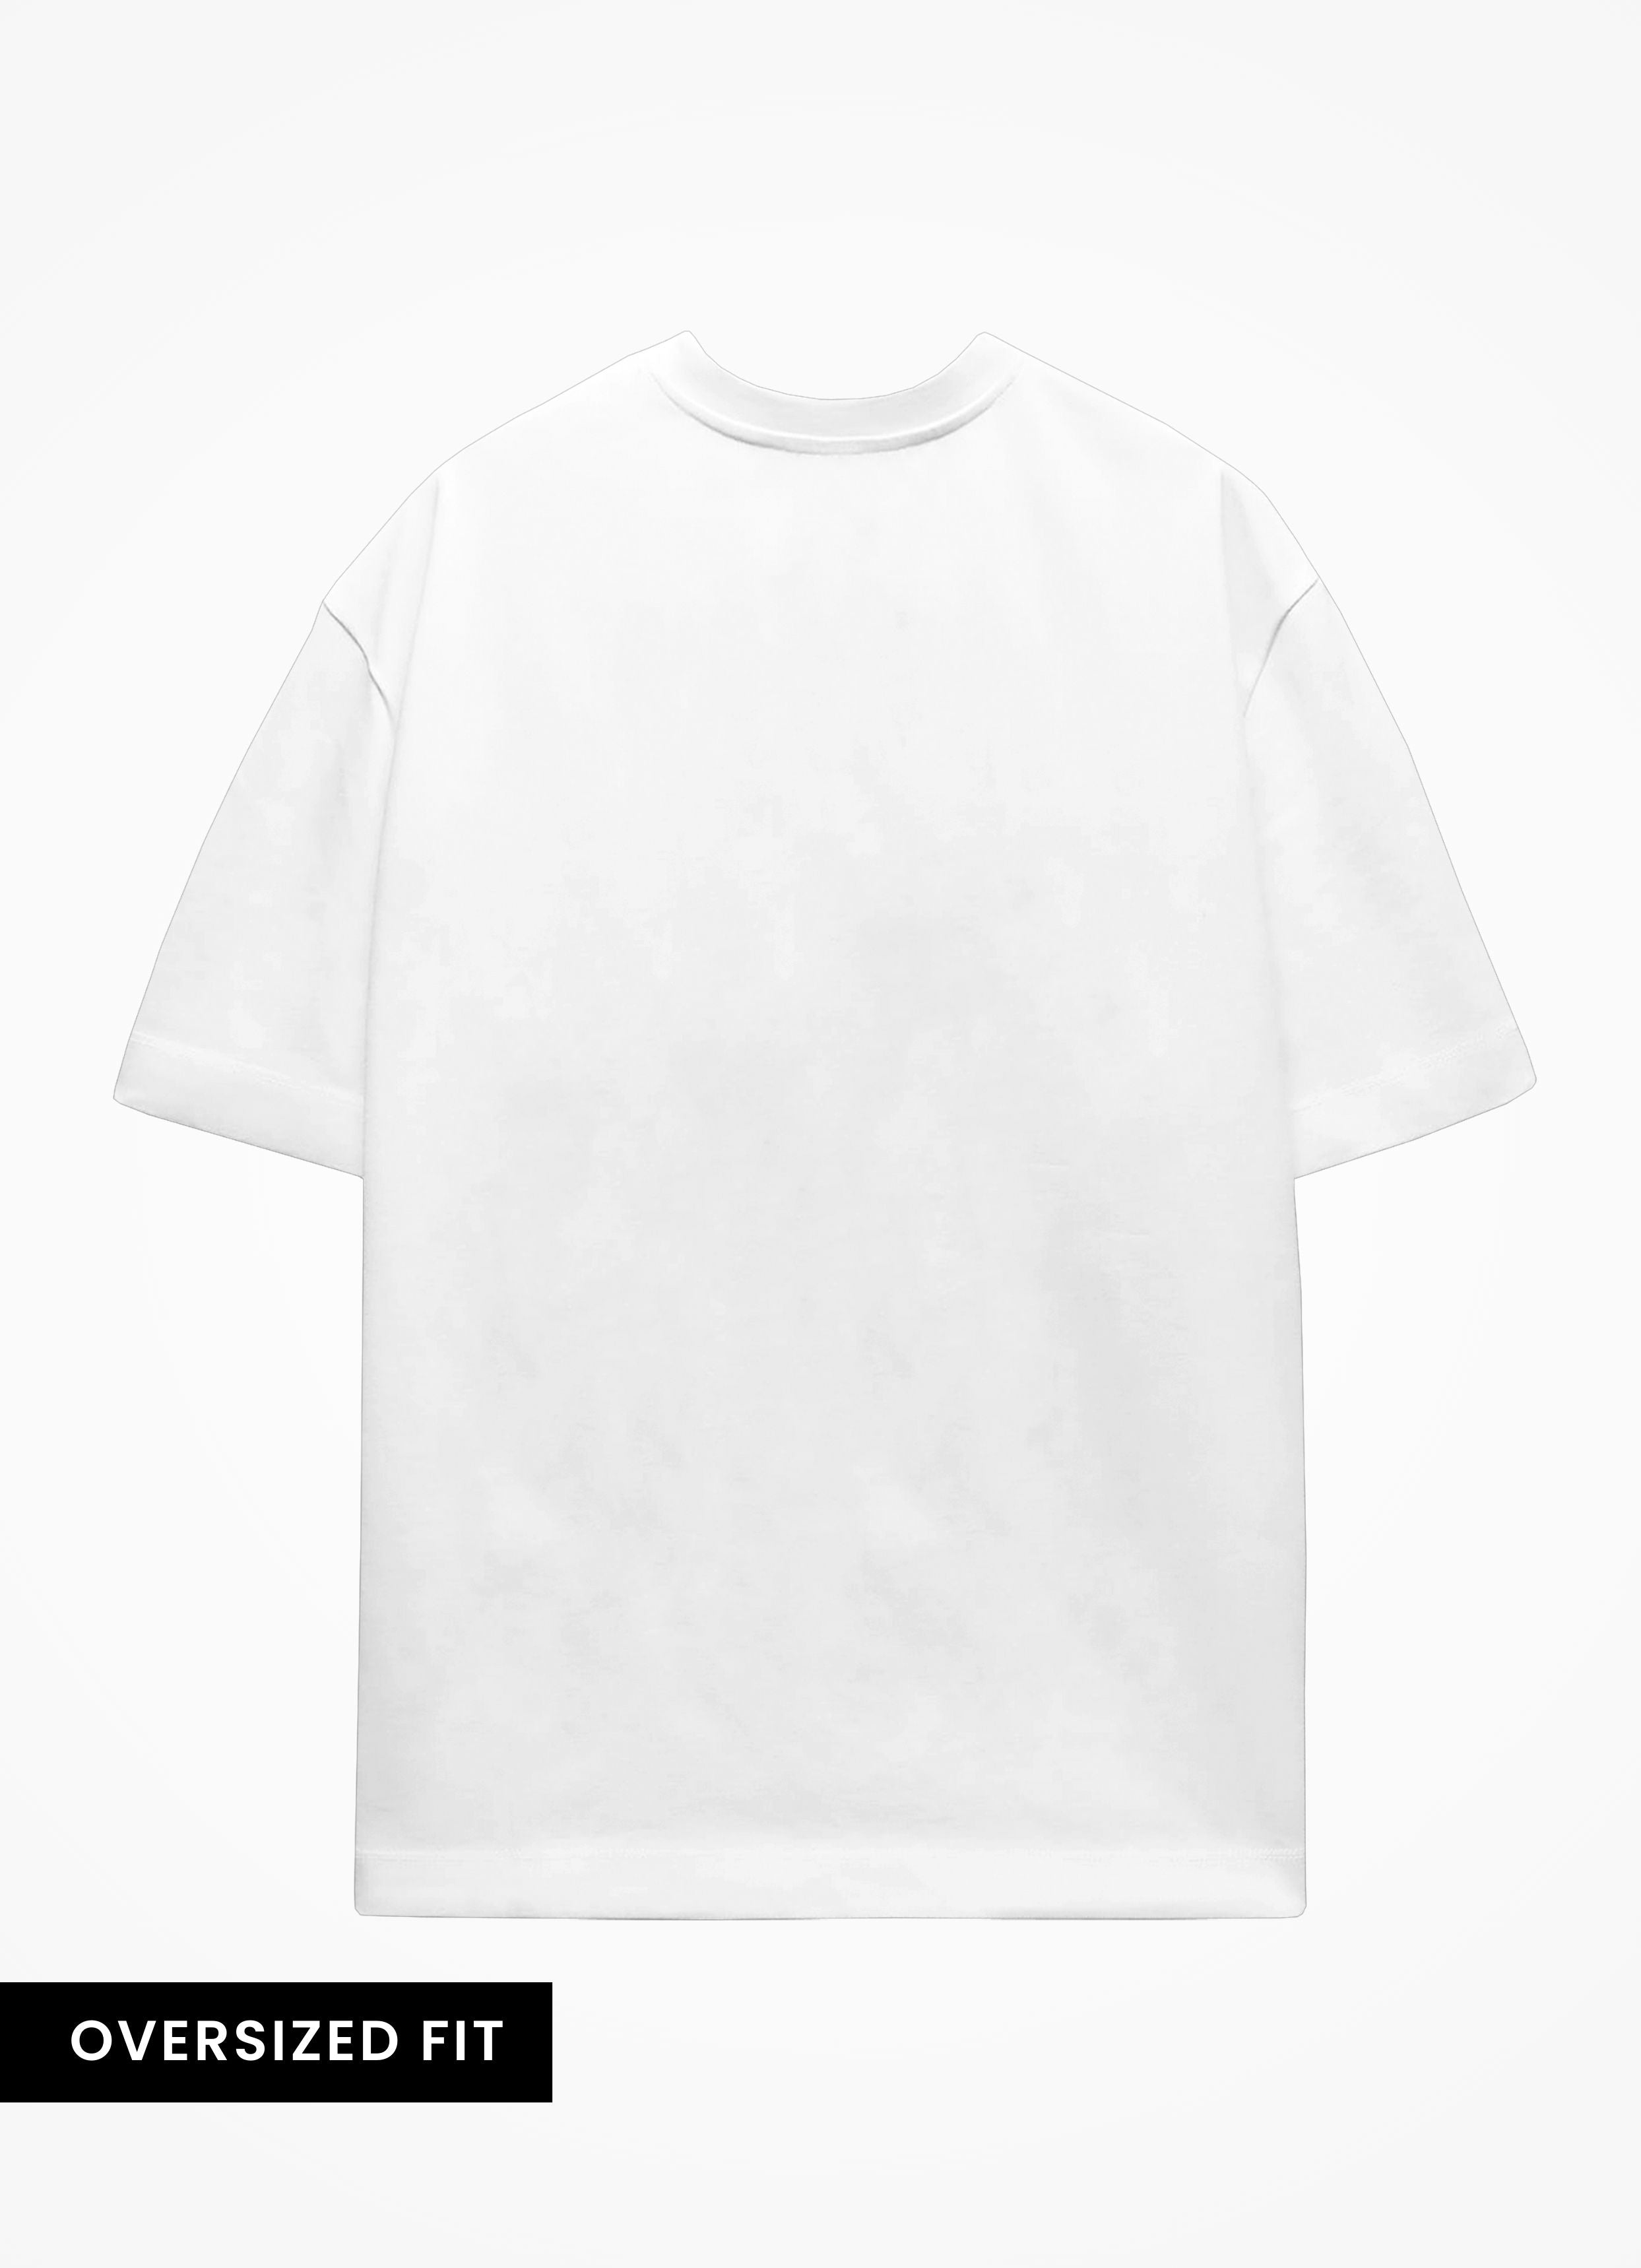 Taylor Swift Champagne Problems Oversized Unisex T-shirt | BFS